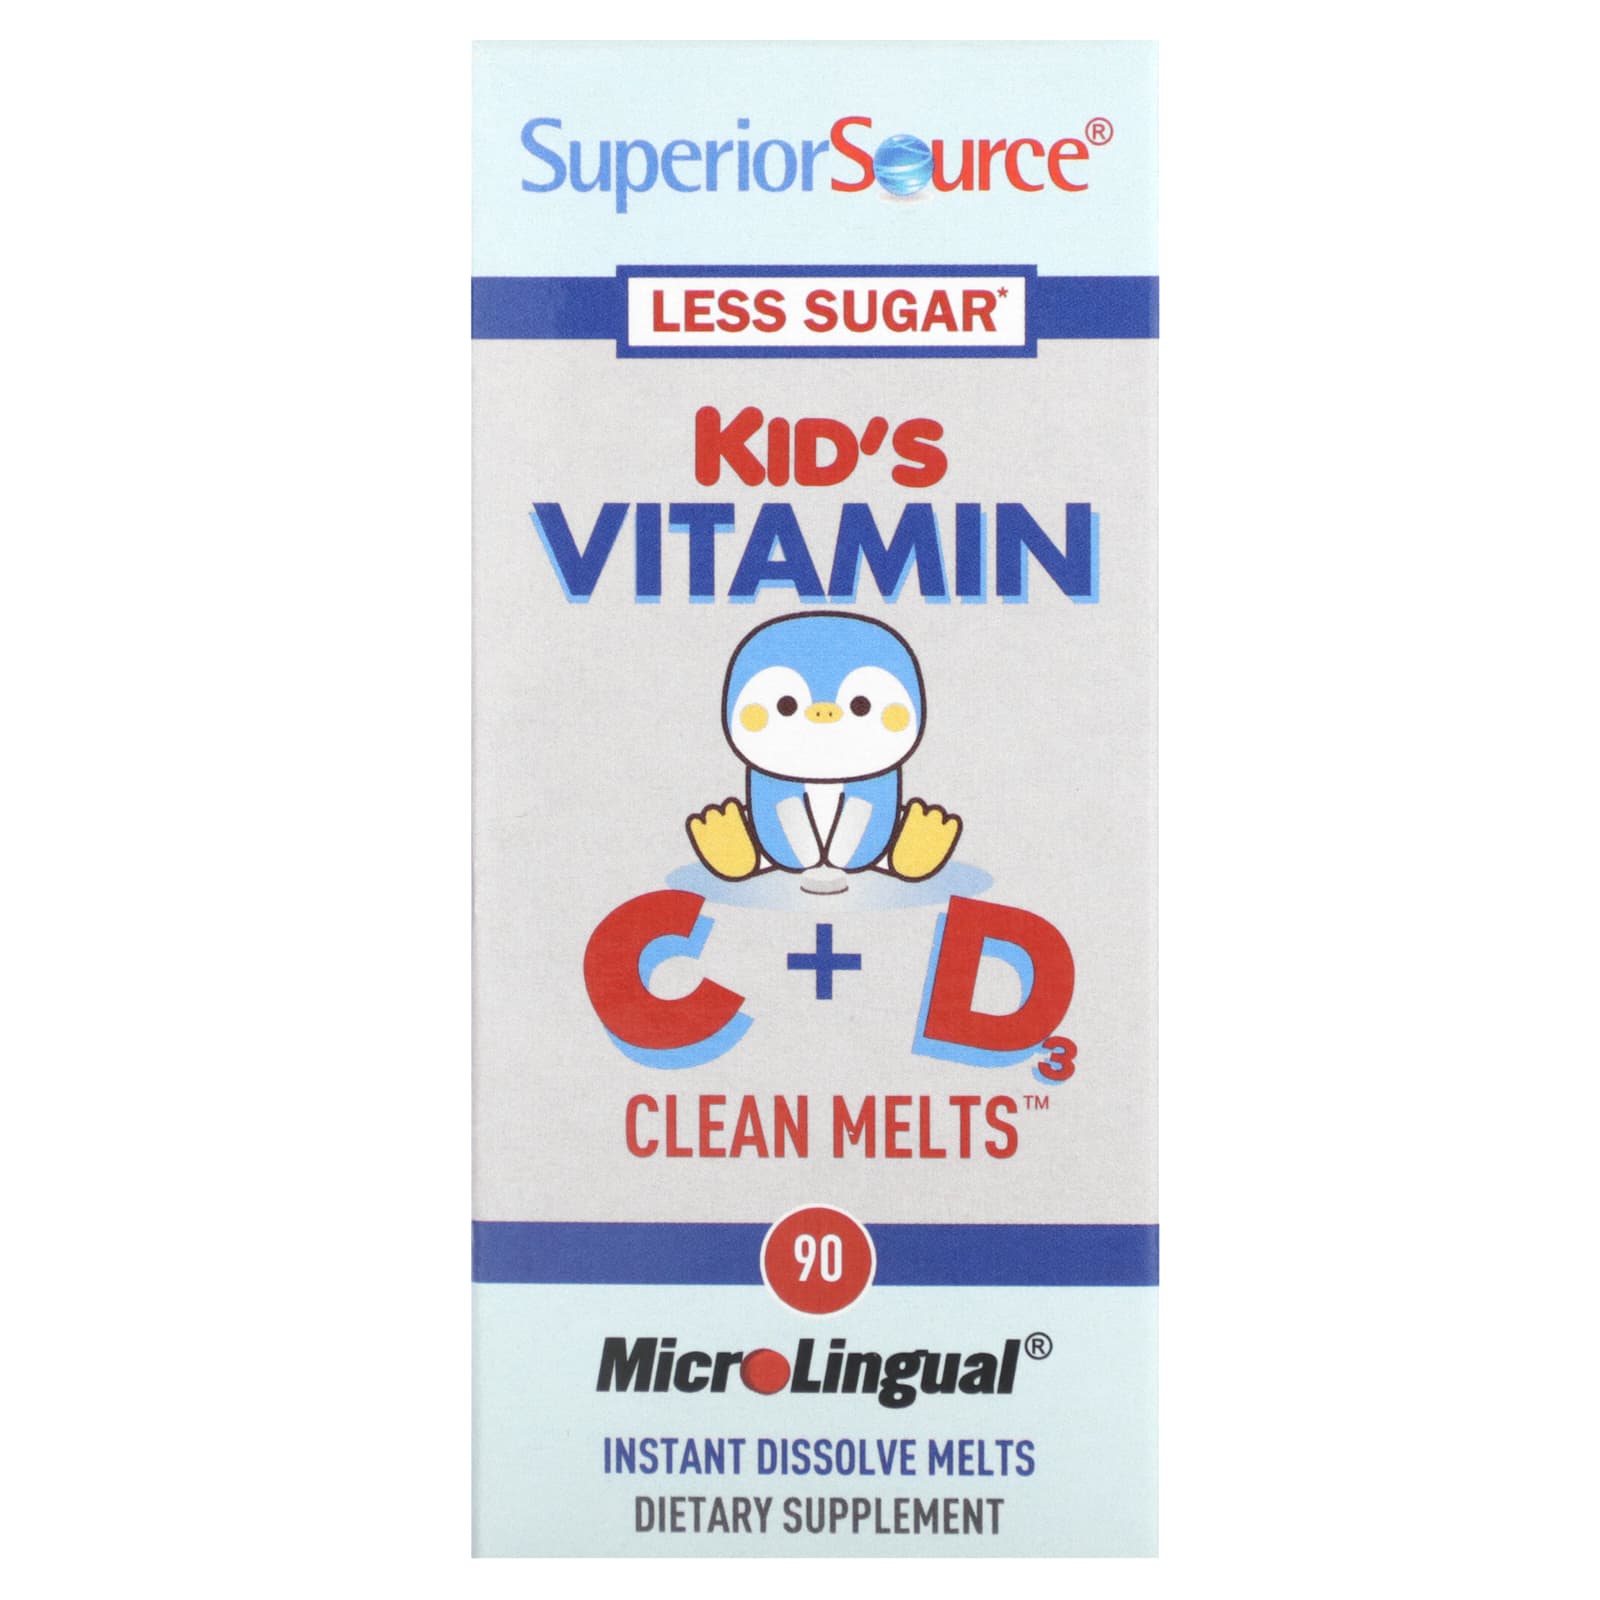 Kid's Vitamin C+D Clean Melts (90 Tablets)